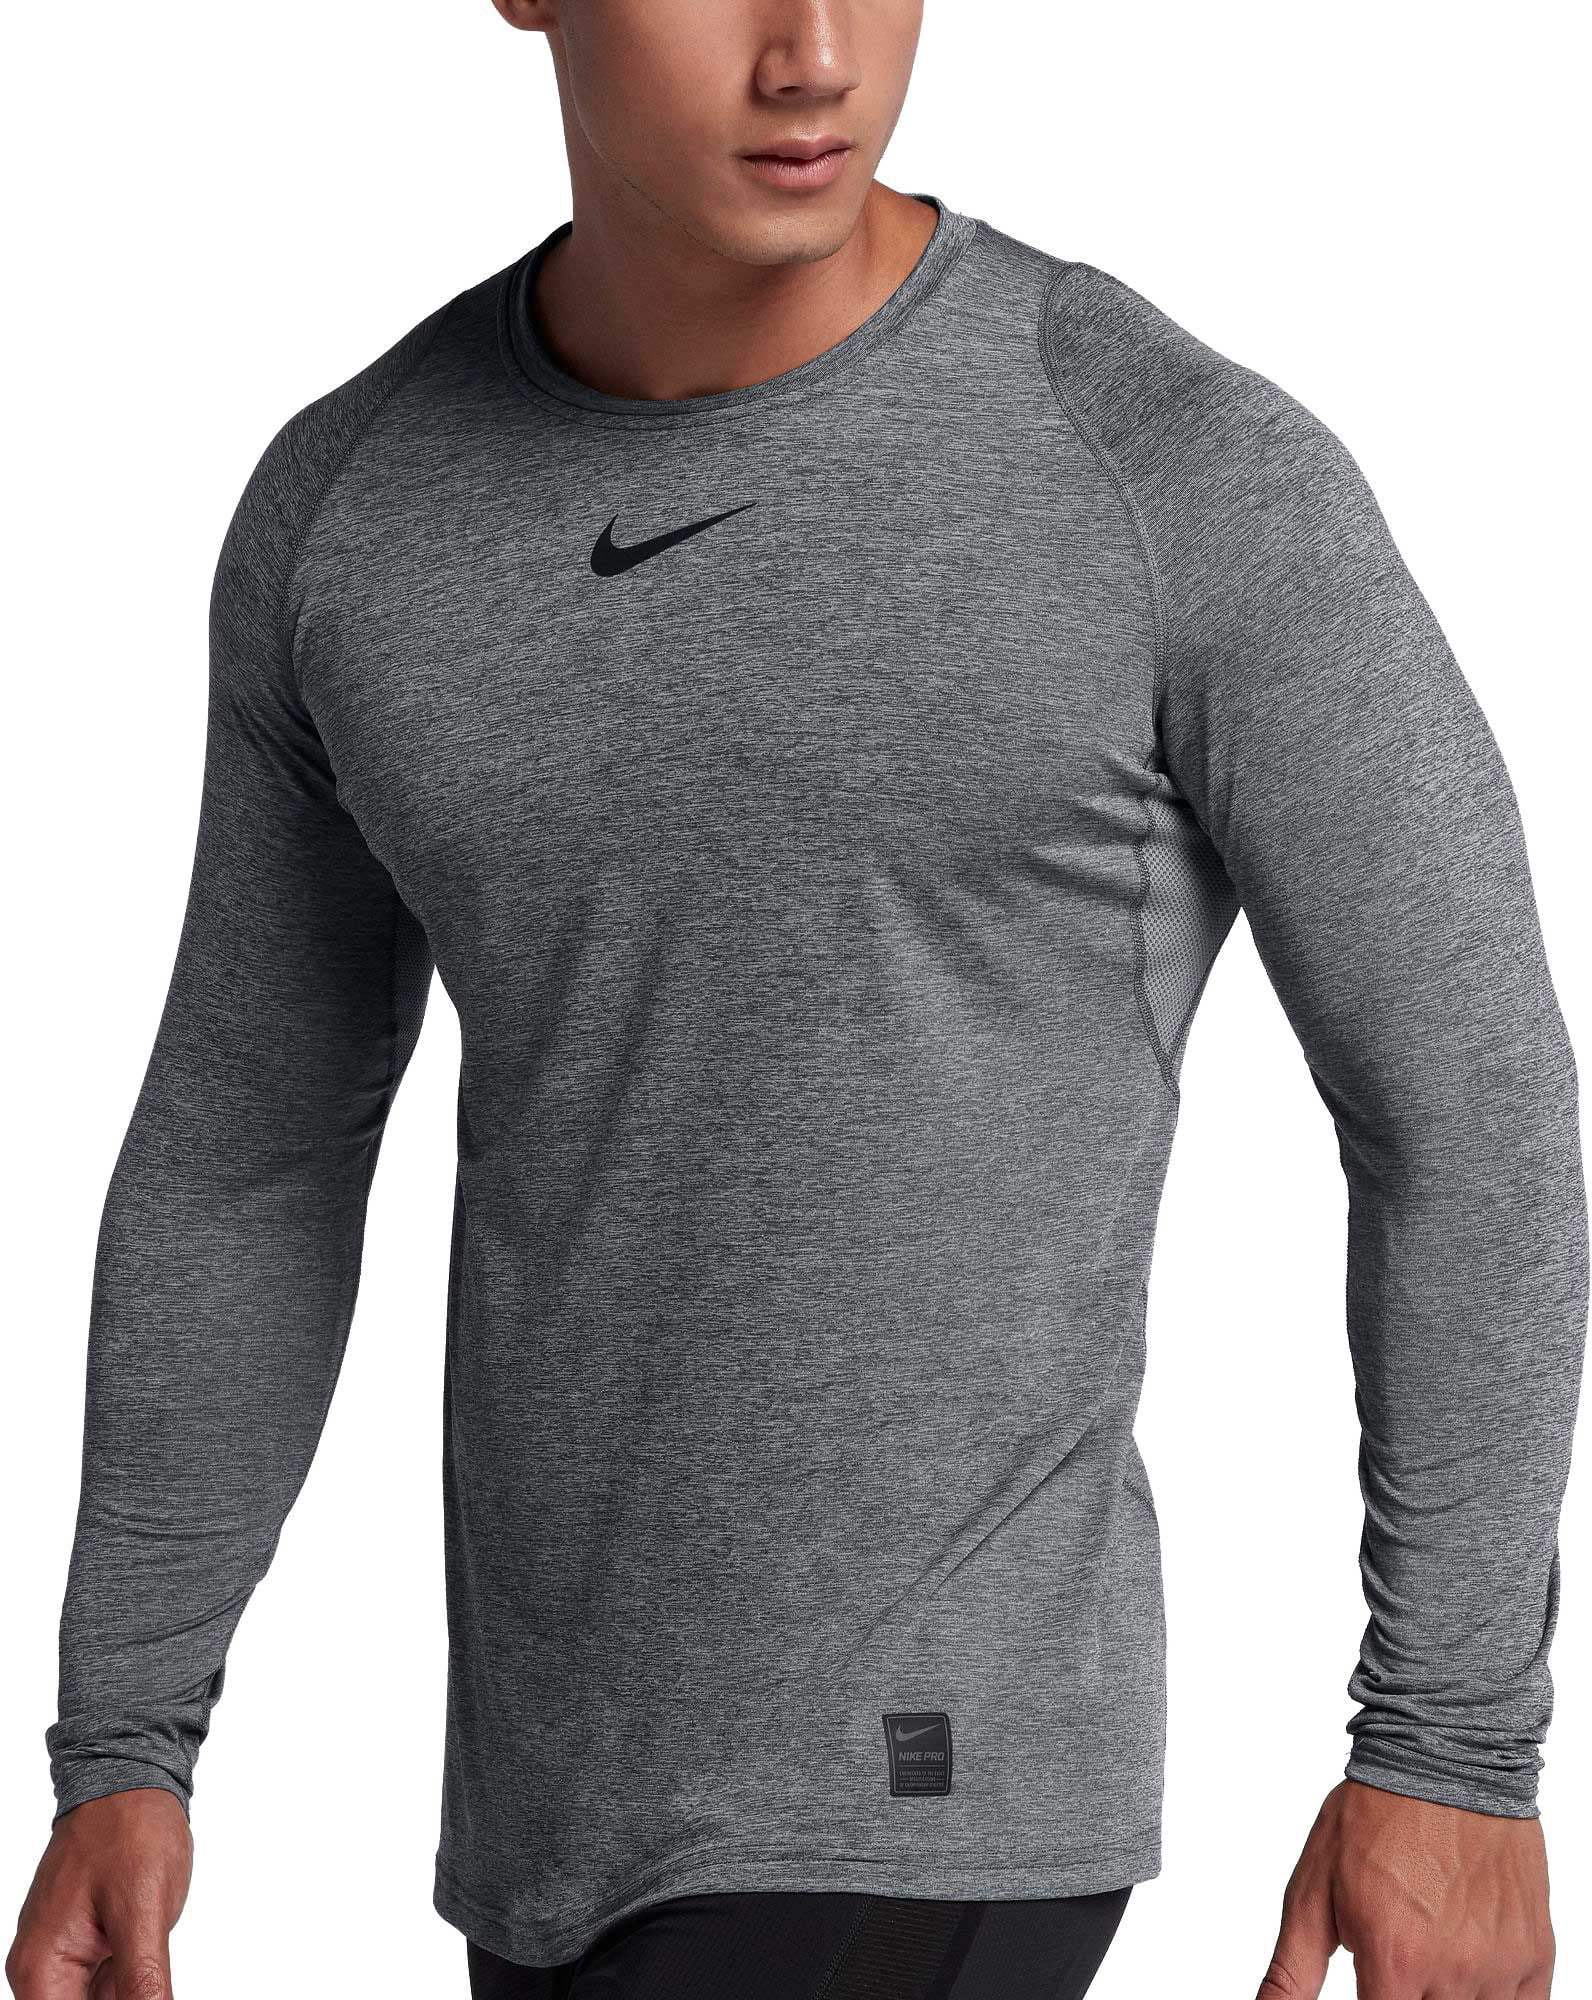 Nike Men's Pro Long Sleeve Fitted Shirt - Walmart.com